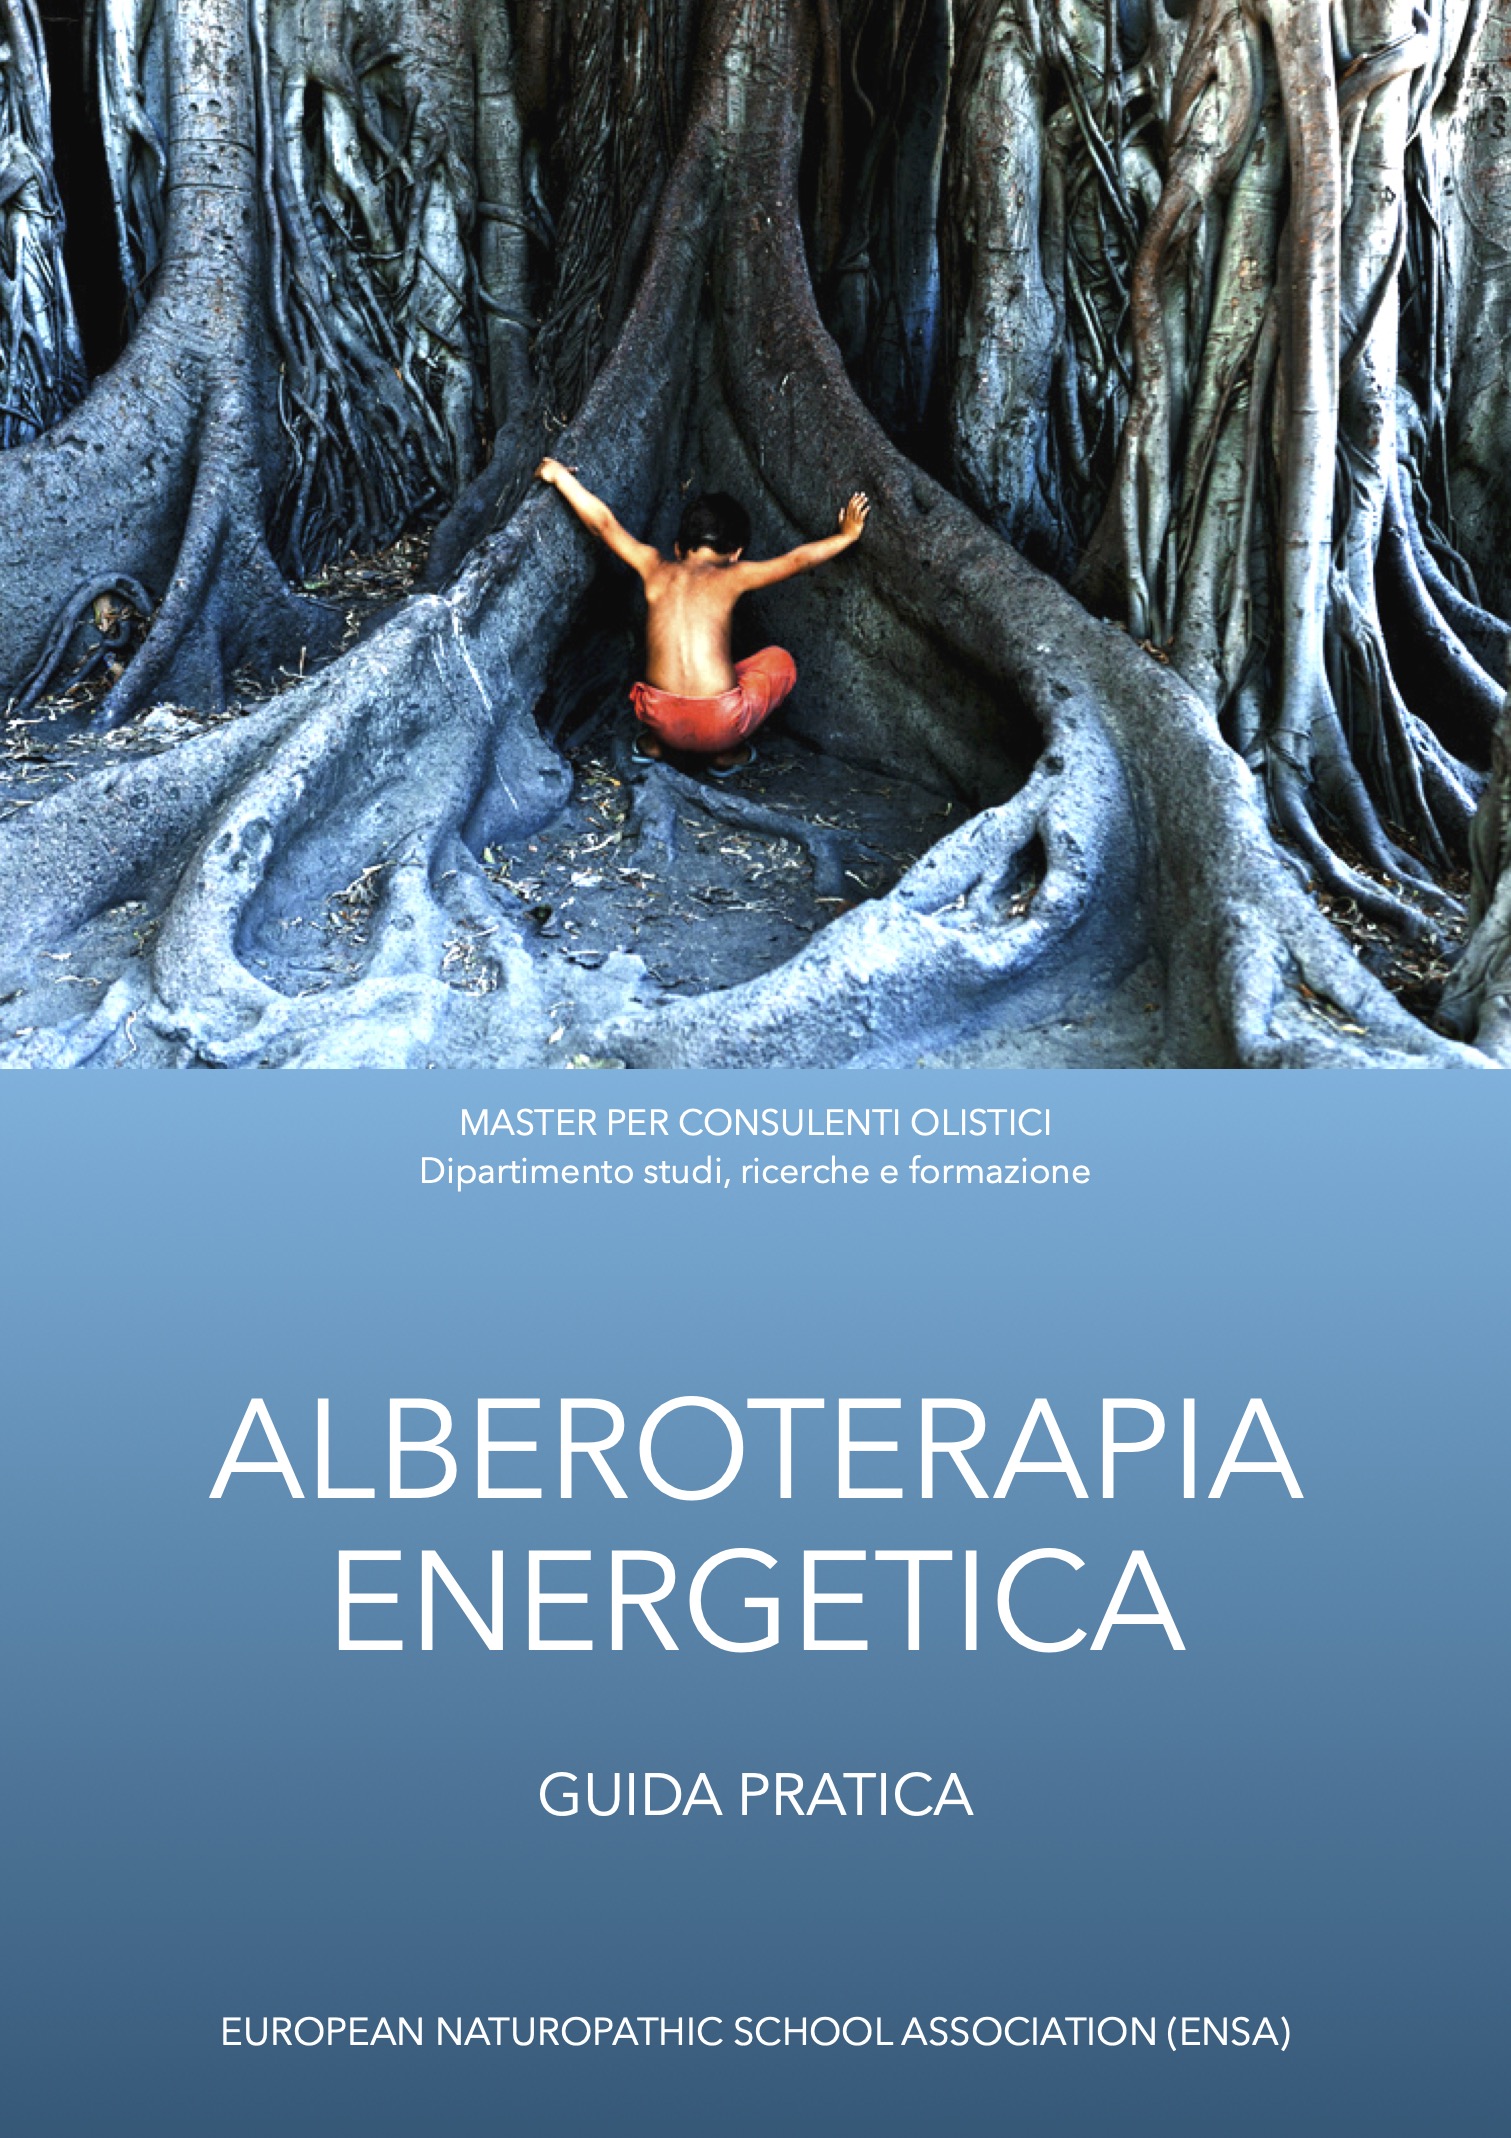 Alberoterapia energetica